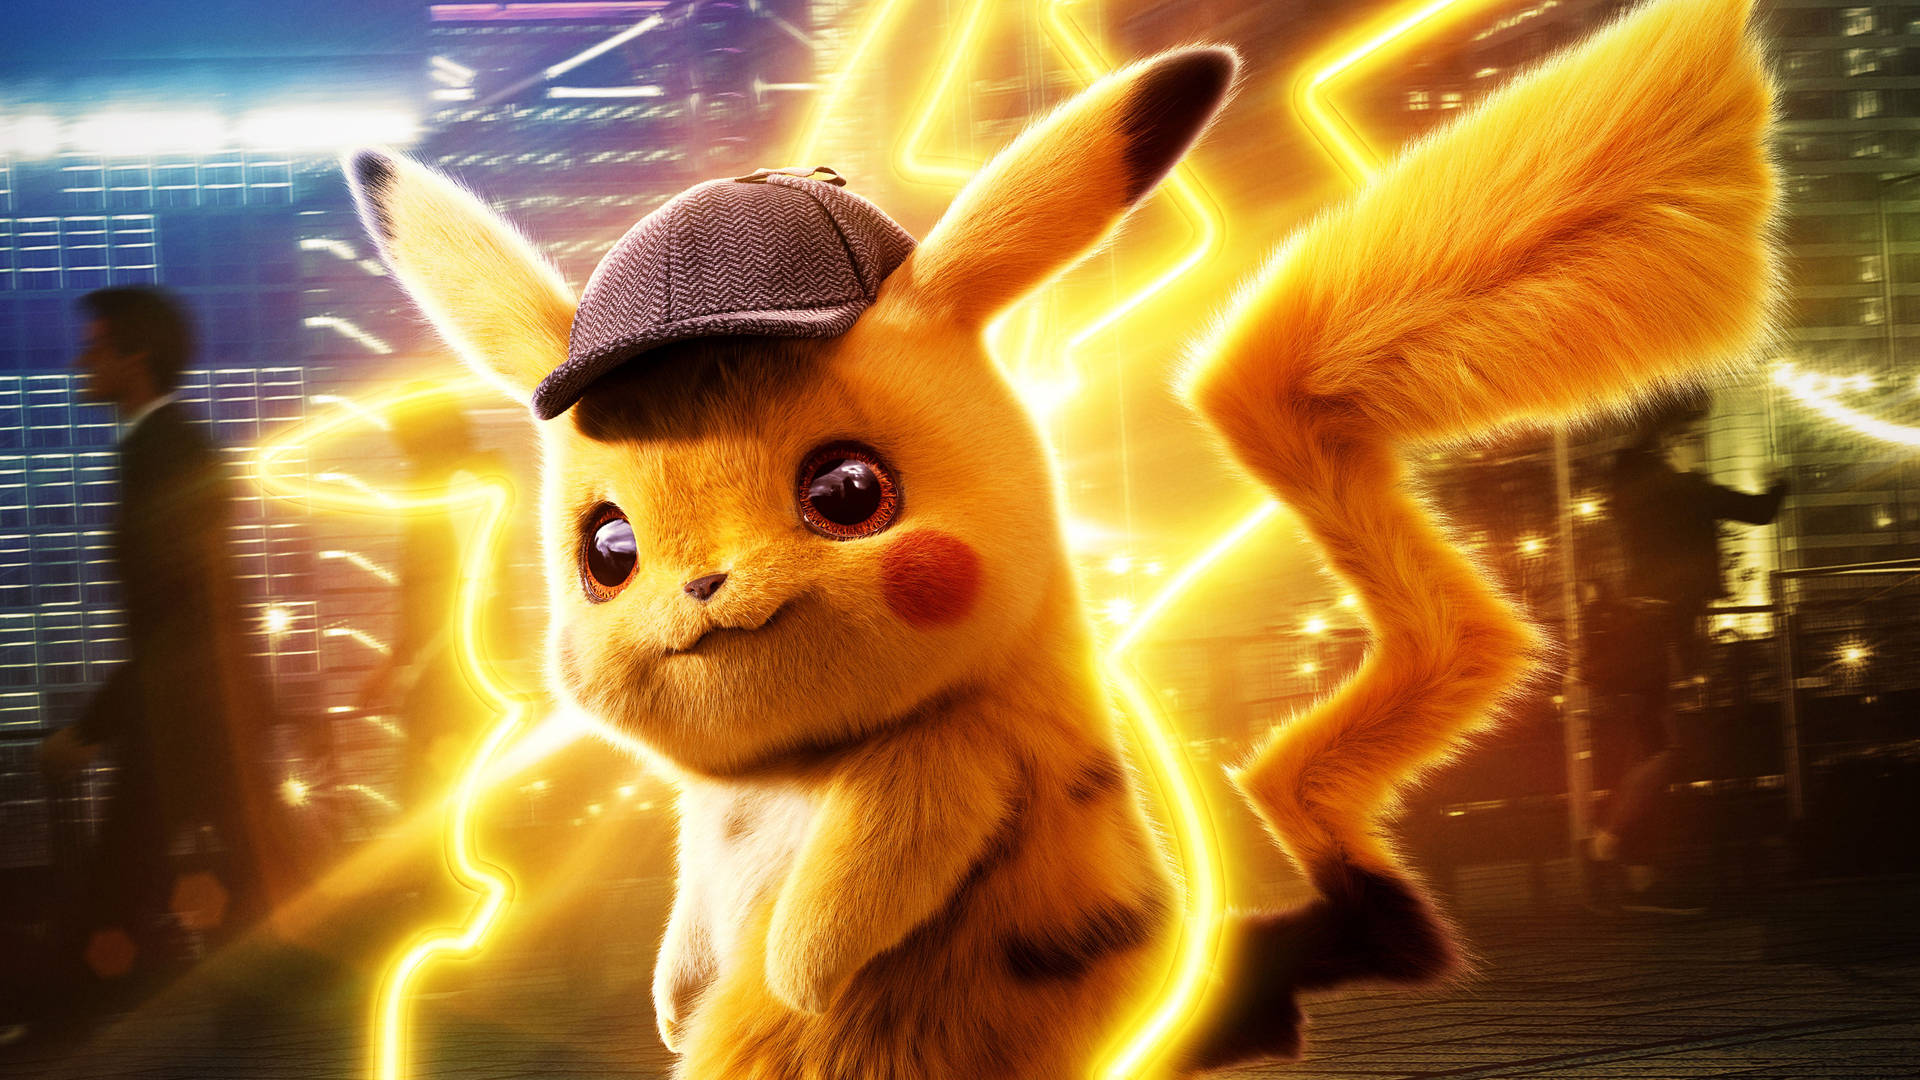 Pokémon Detective Pikachu Movie Poster Wallpaper